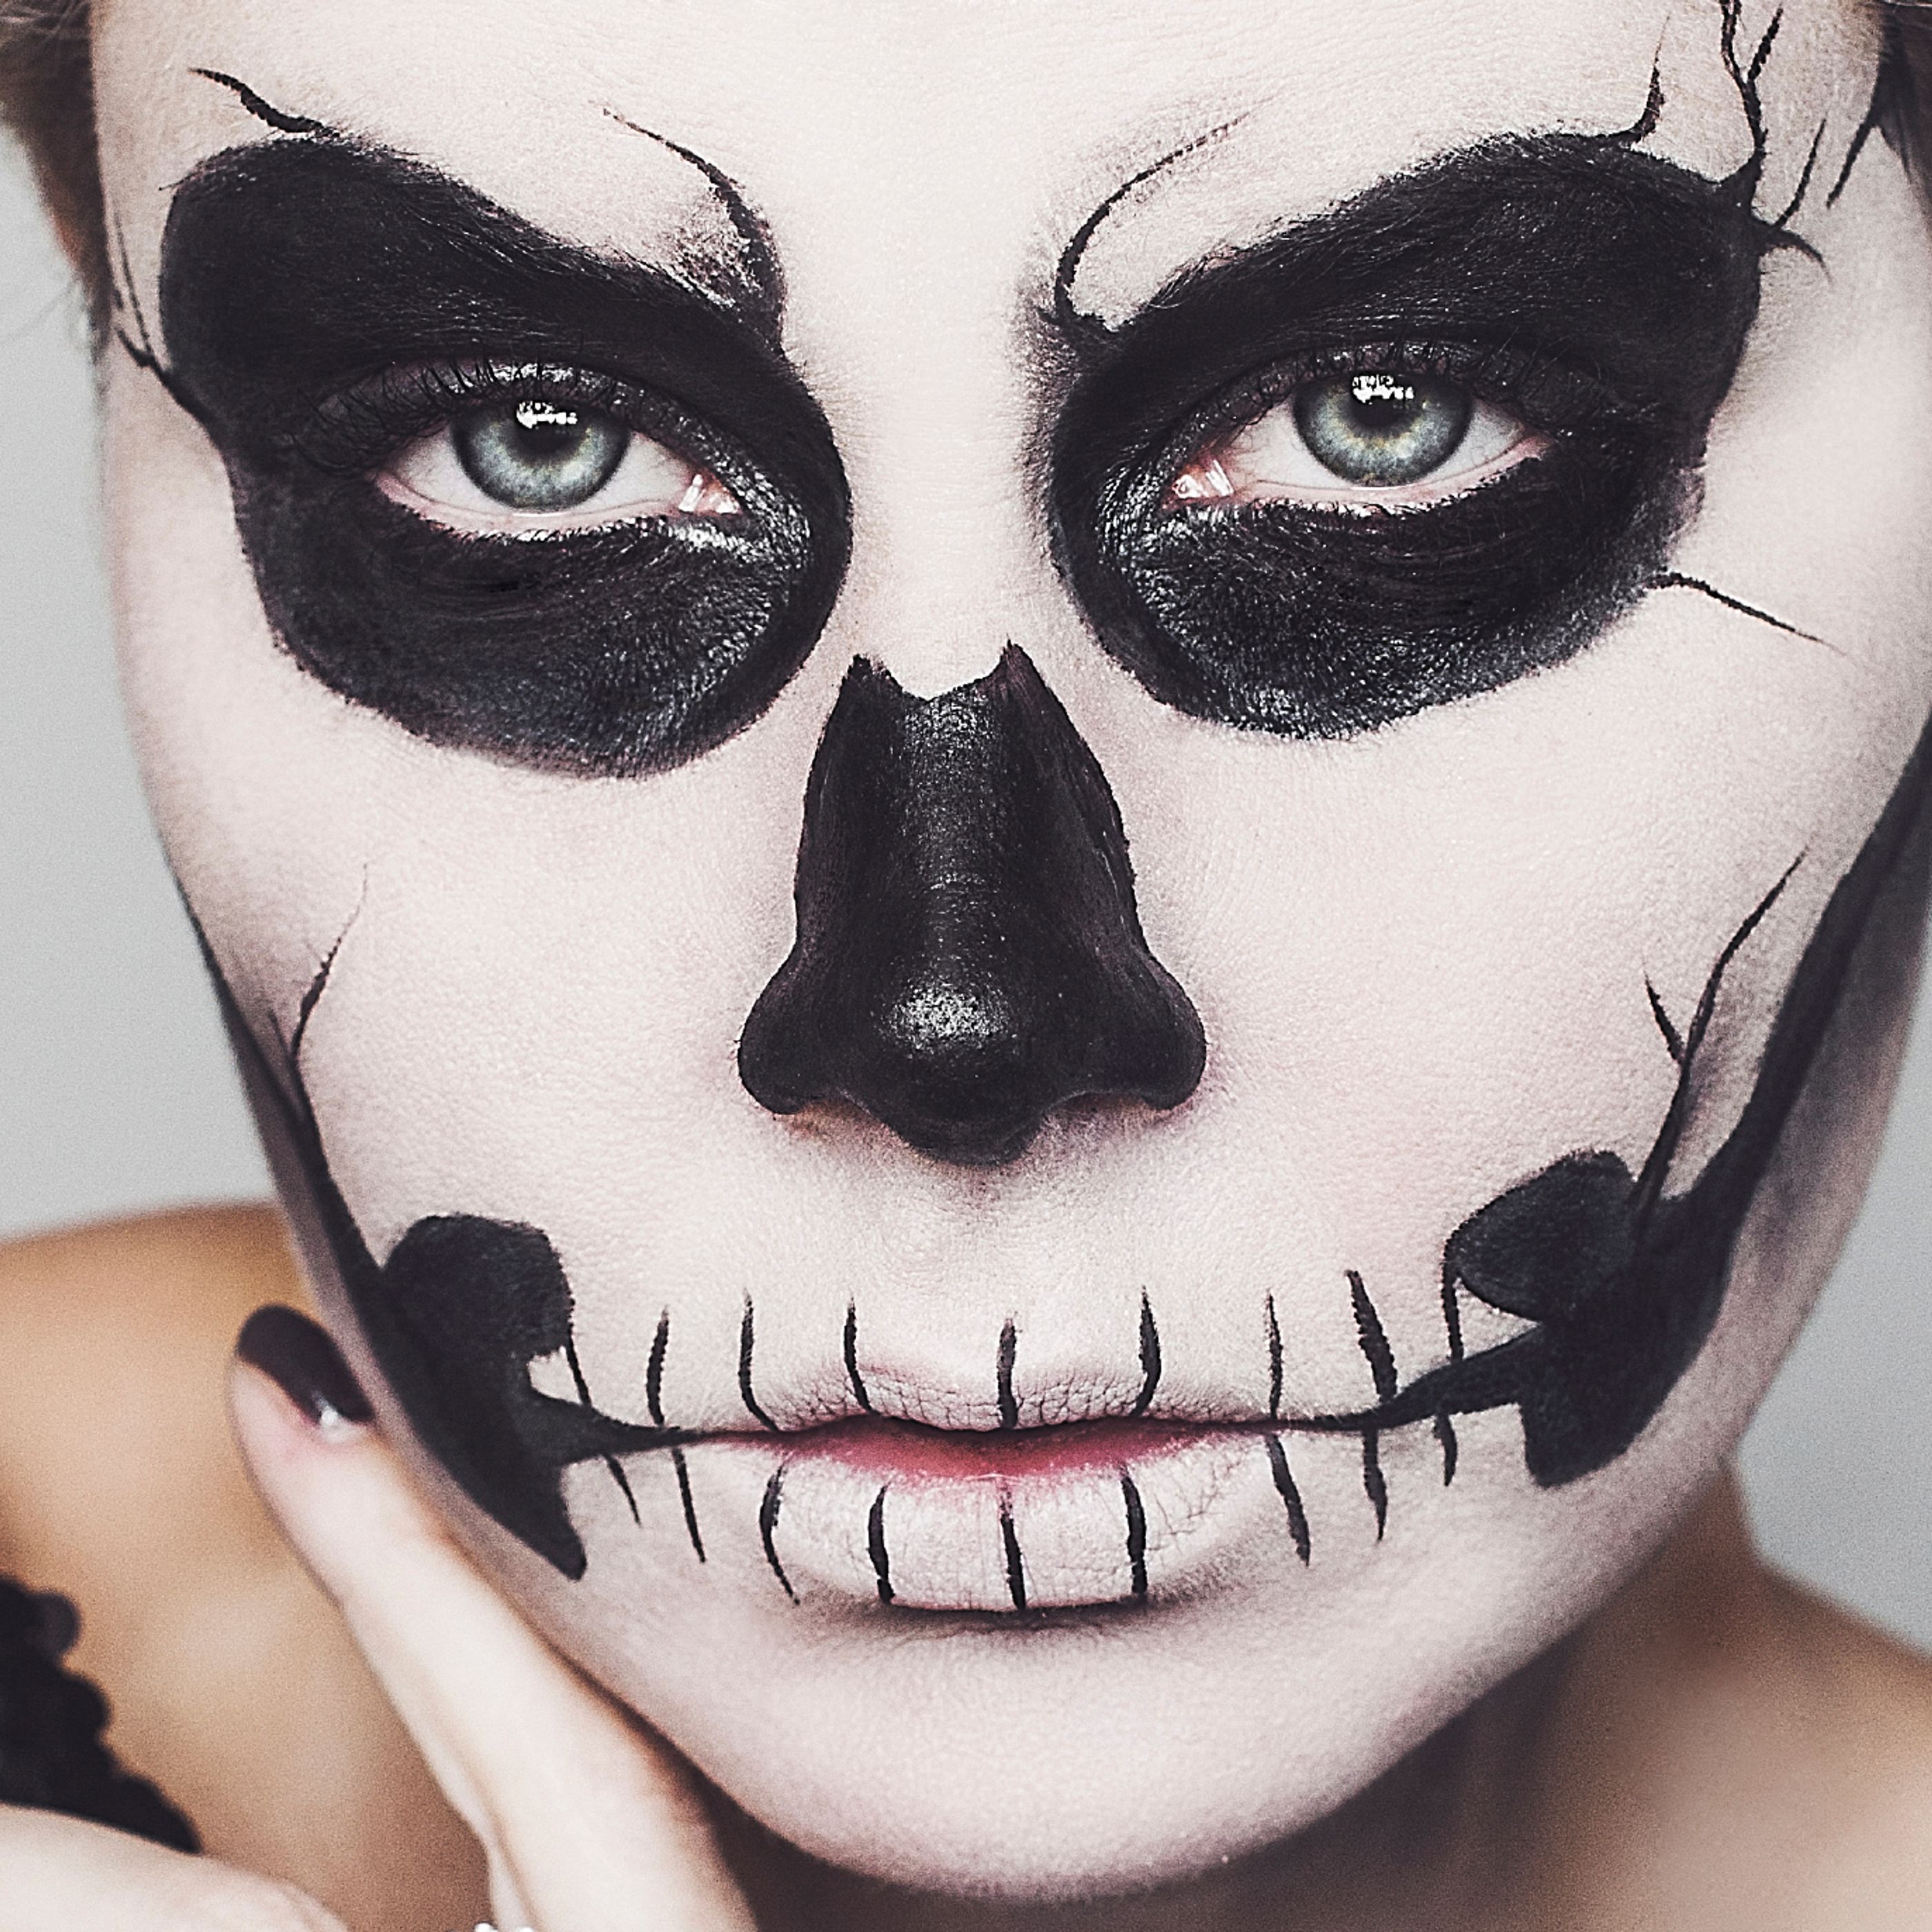 Maquillage Halloween femme : 10 tutos à reproduire - Marie Claire